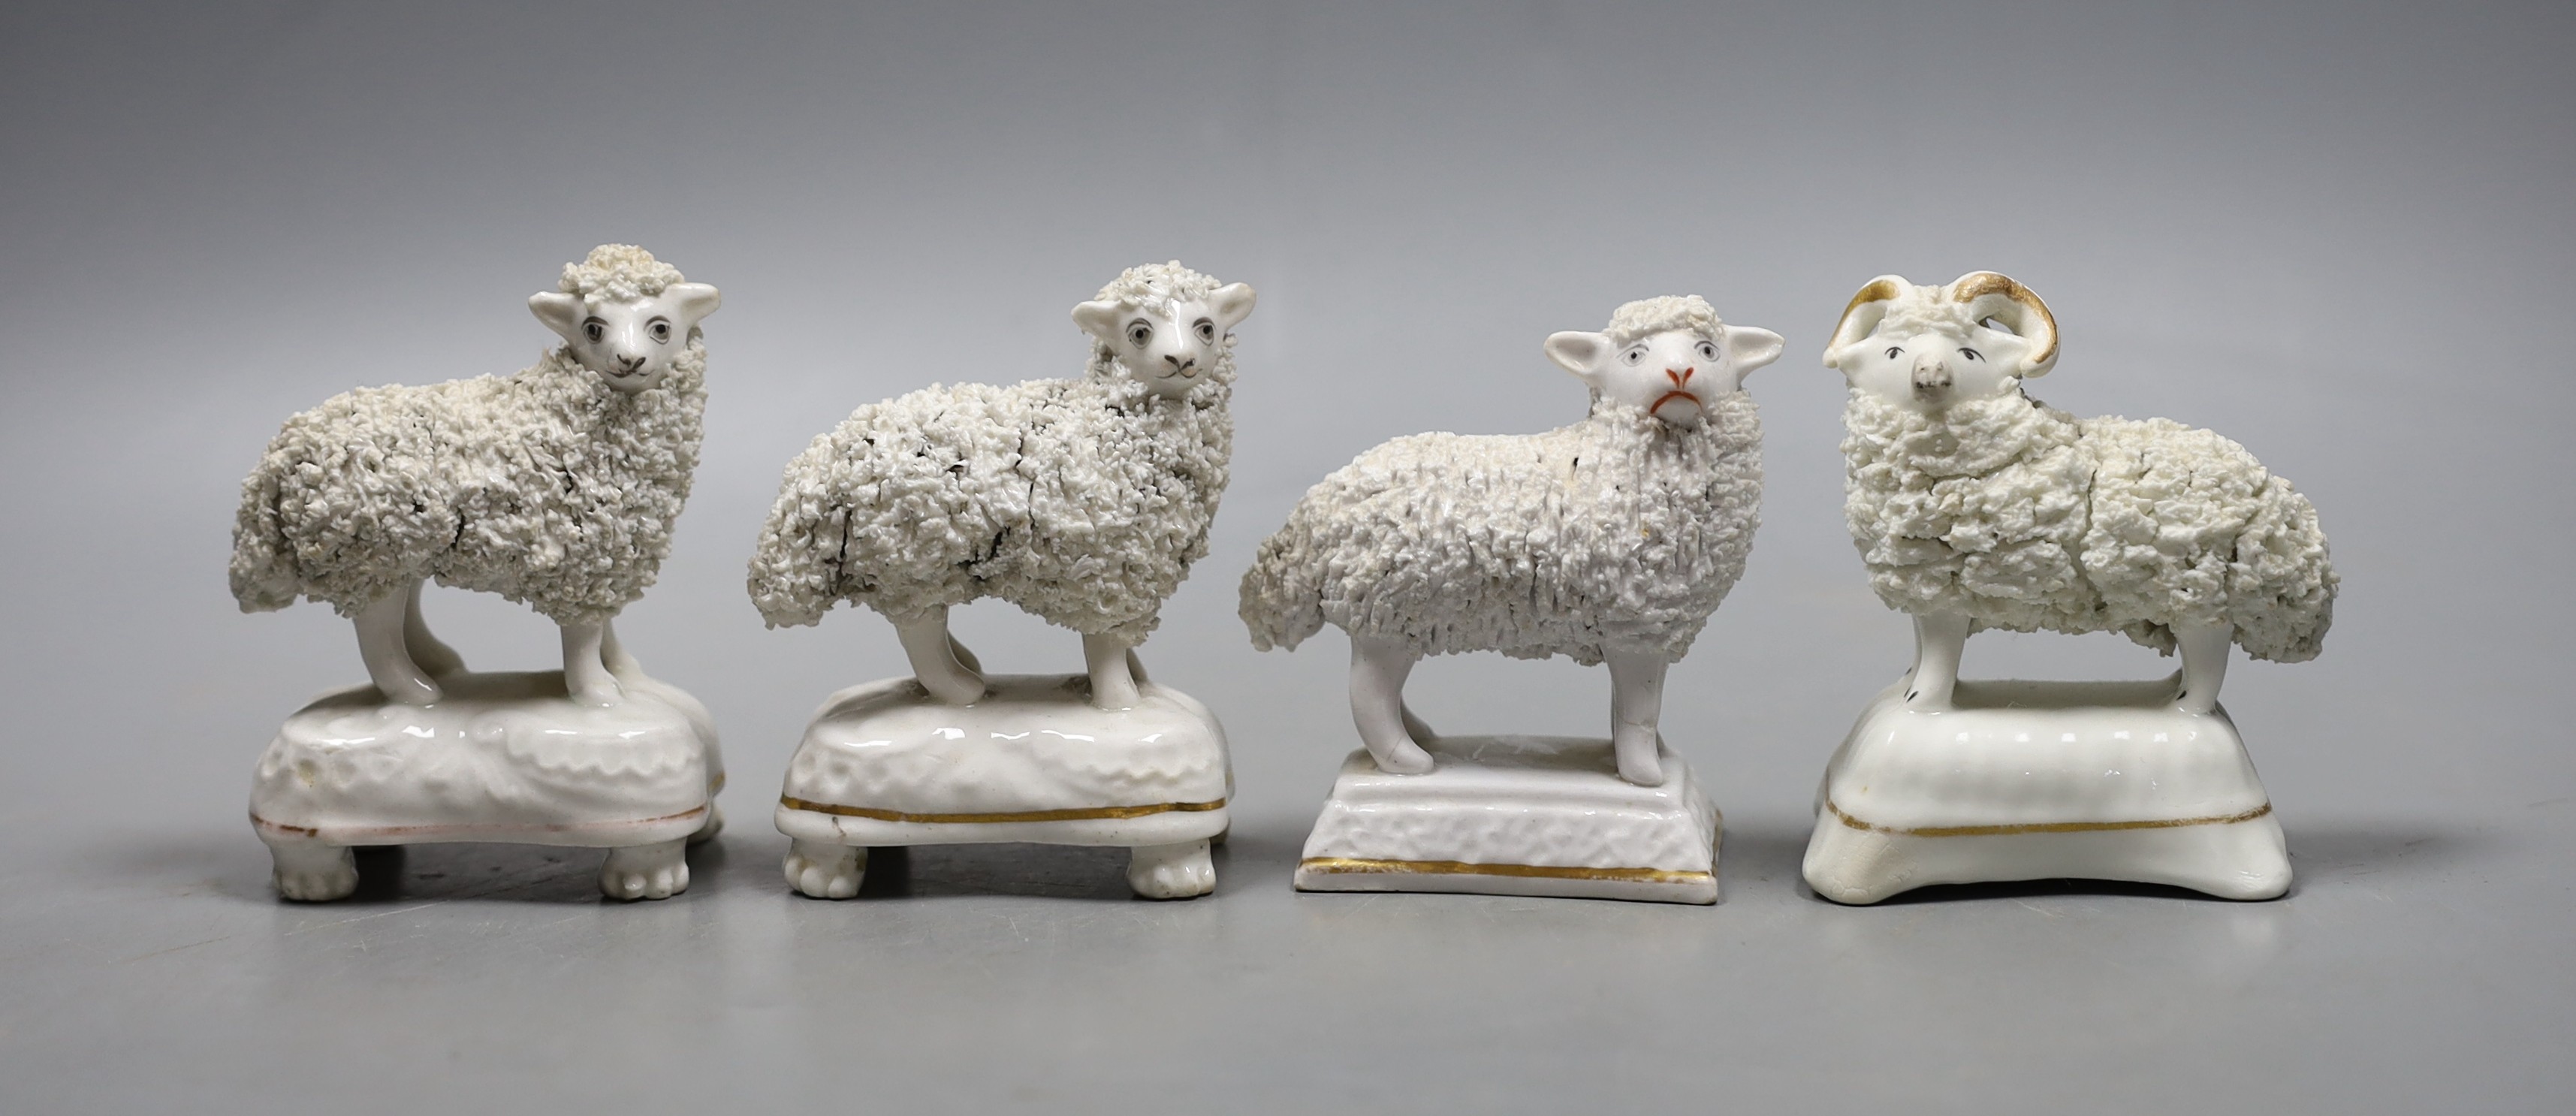 Four Staffordshire porcelain models of sheep, c.1830–50, the largest 7.5 cm long, Provenance- Dennis G Rice collection